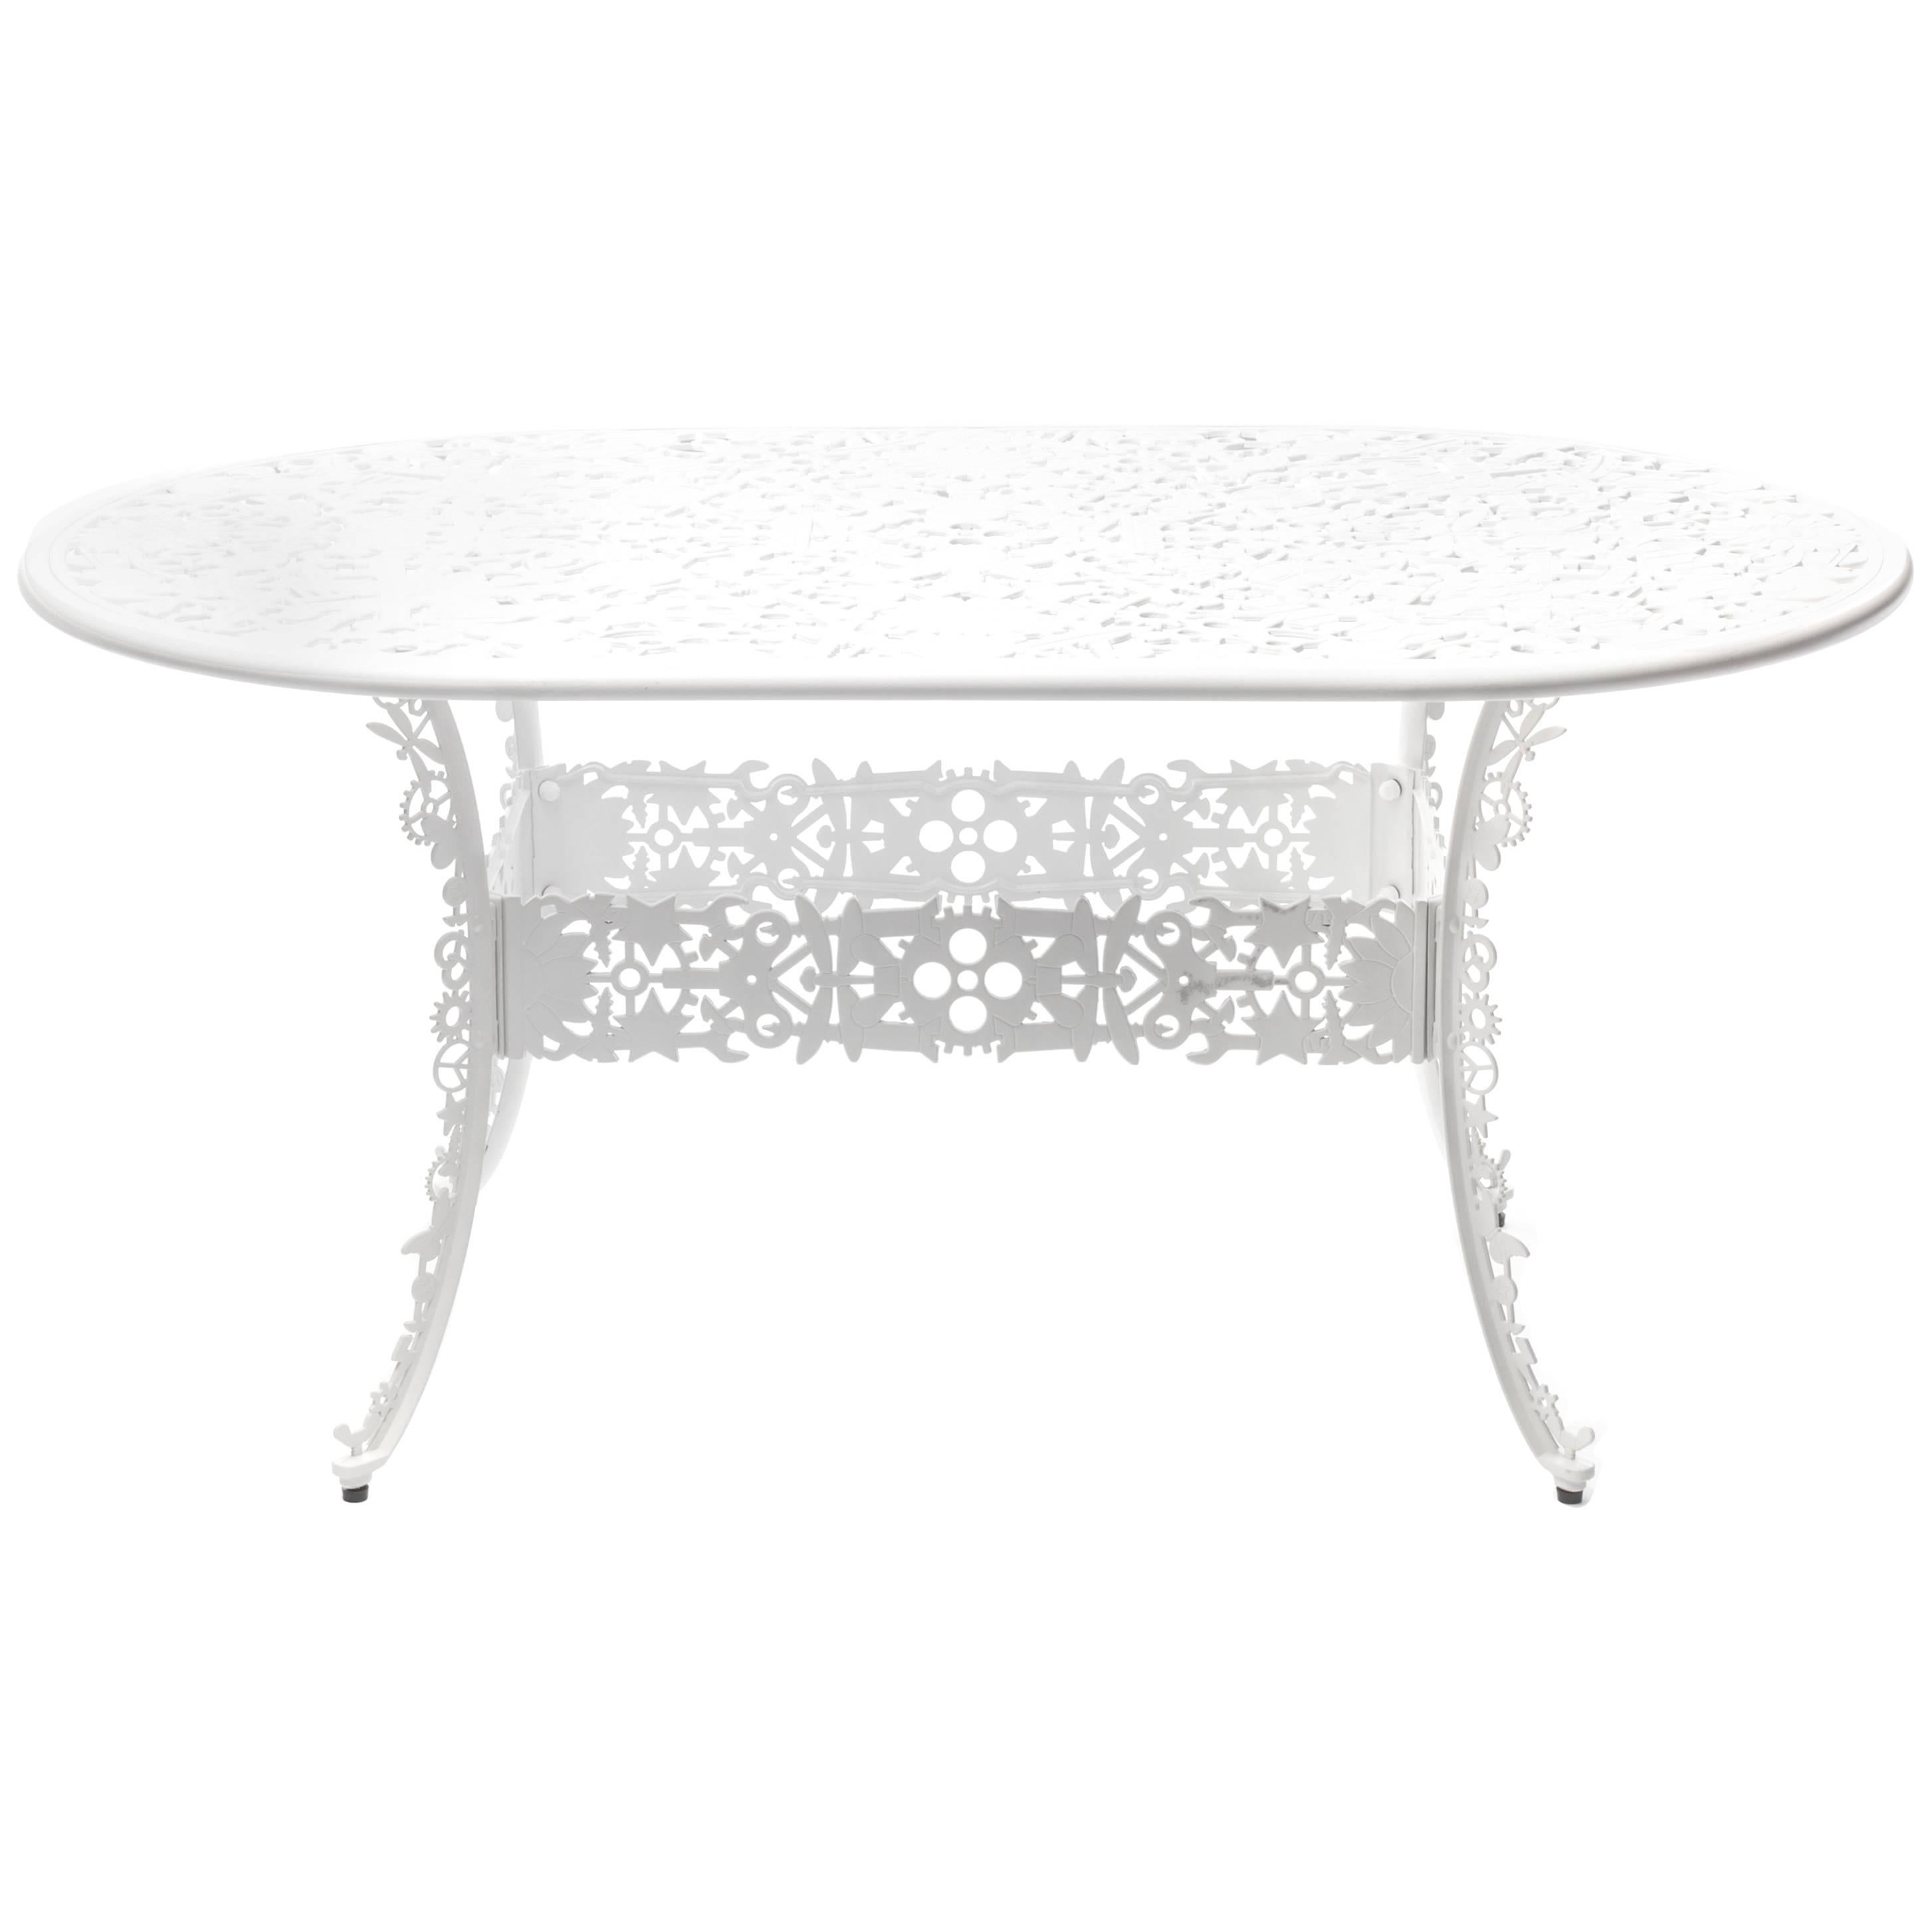 Table ovale en aluminium « Collection d'industrie » de Seletti, blanche en vente